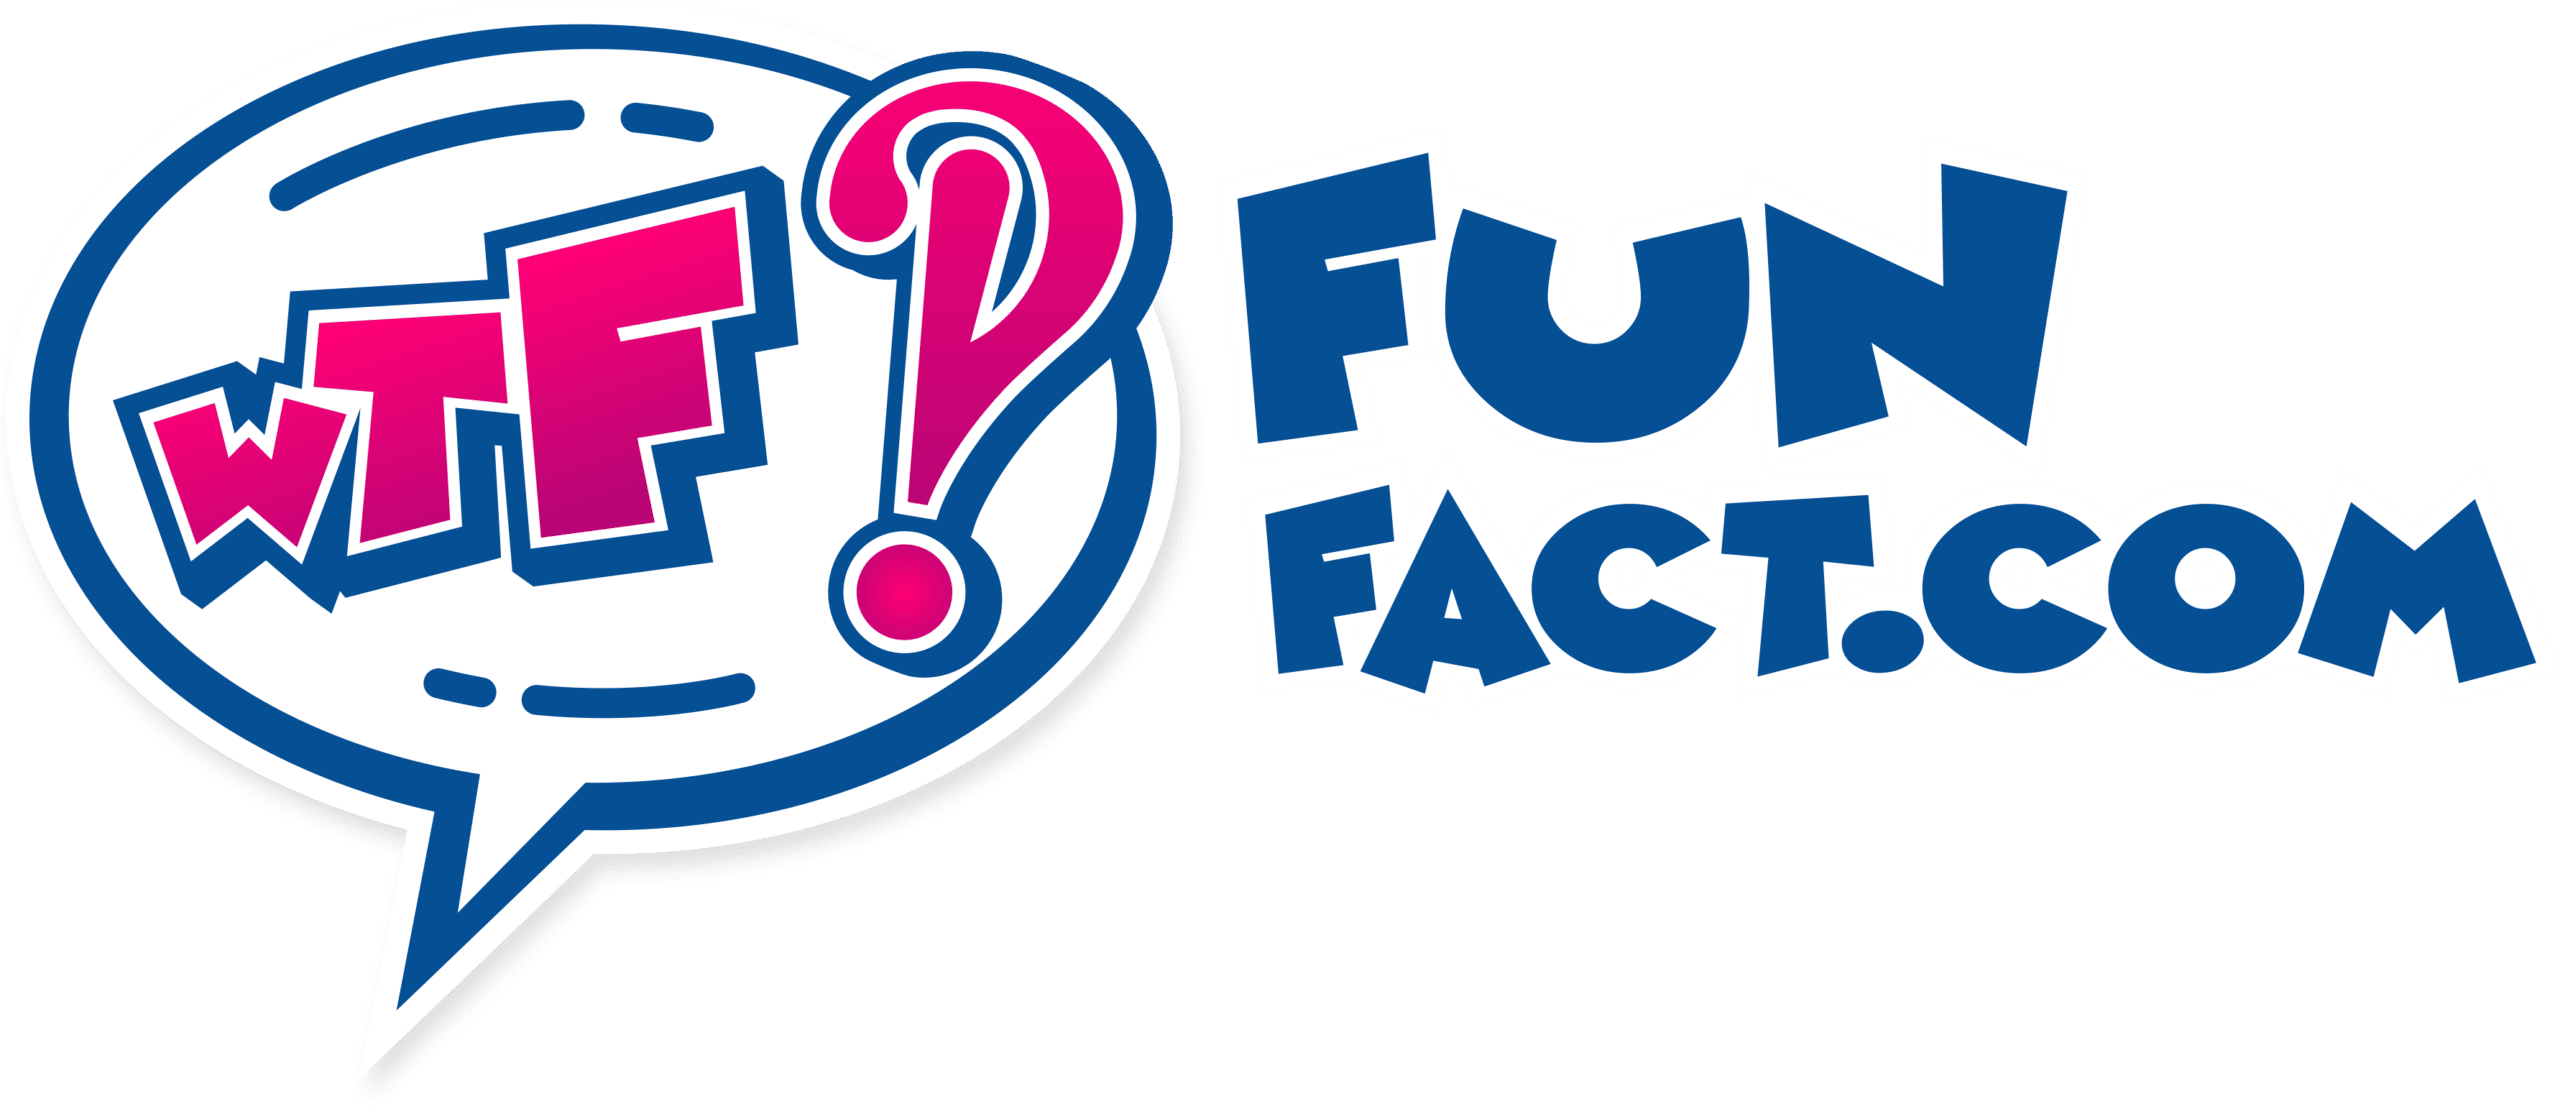 WTF Fun Fact 13415 - World's Oldest Dog